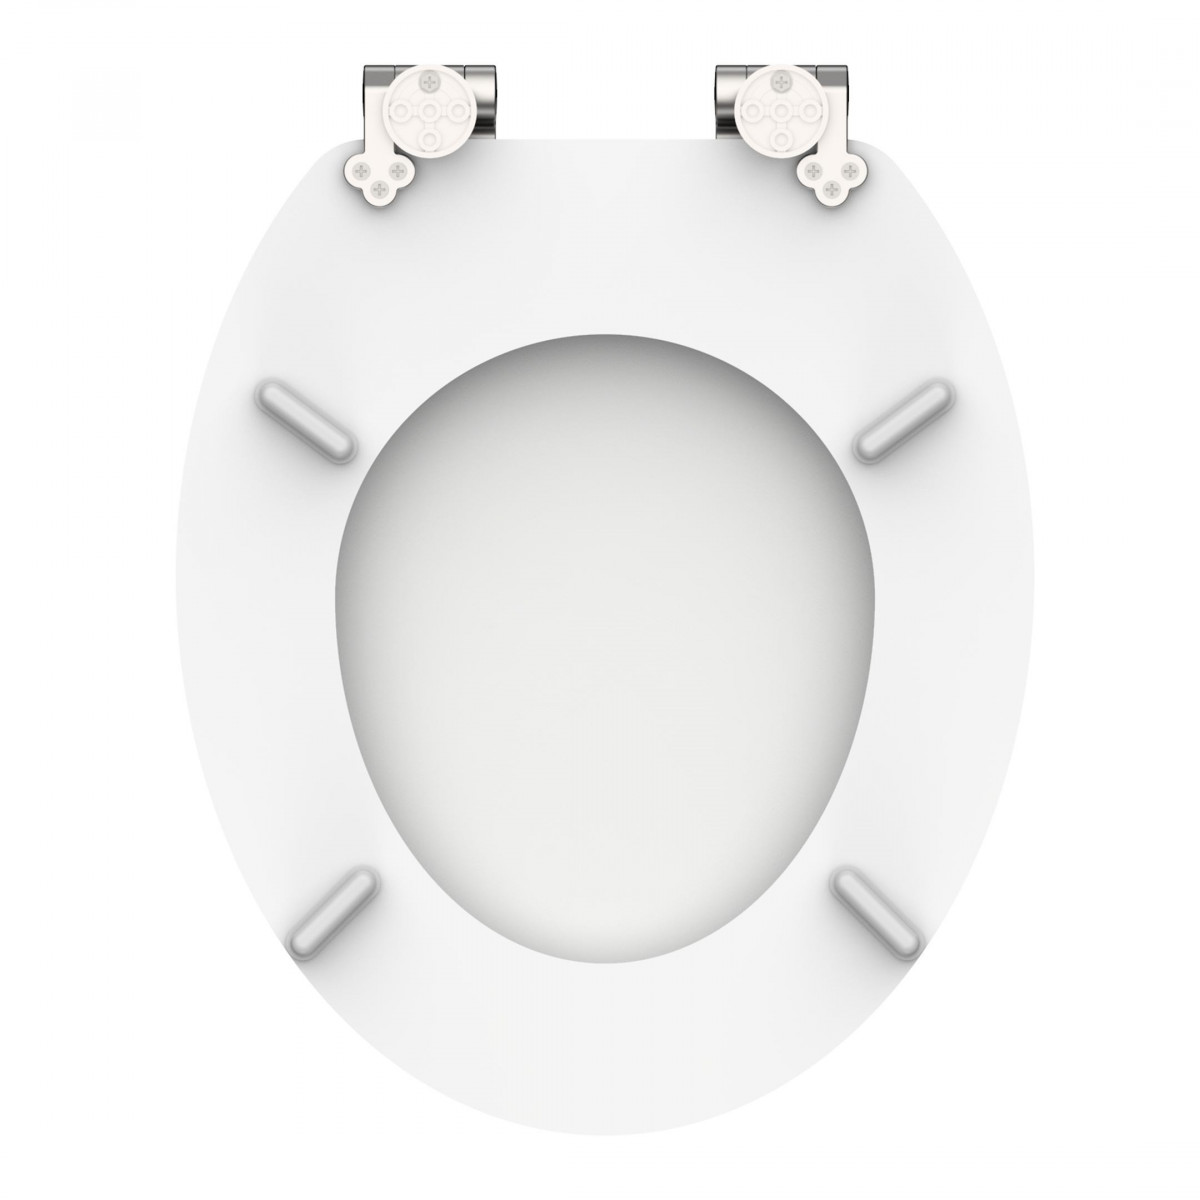 MDF Toilet Seat SPIRIT WHITE with Soft Close